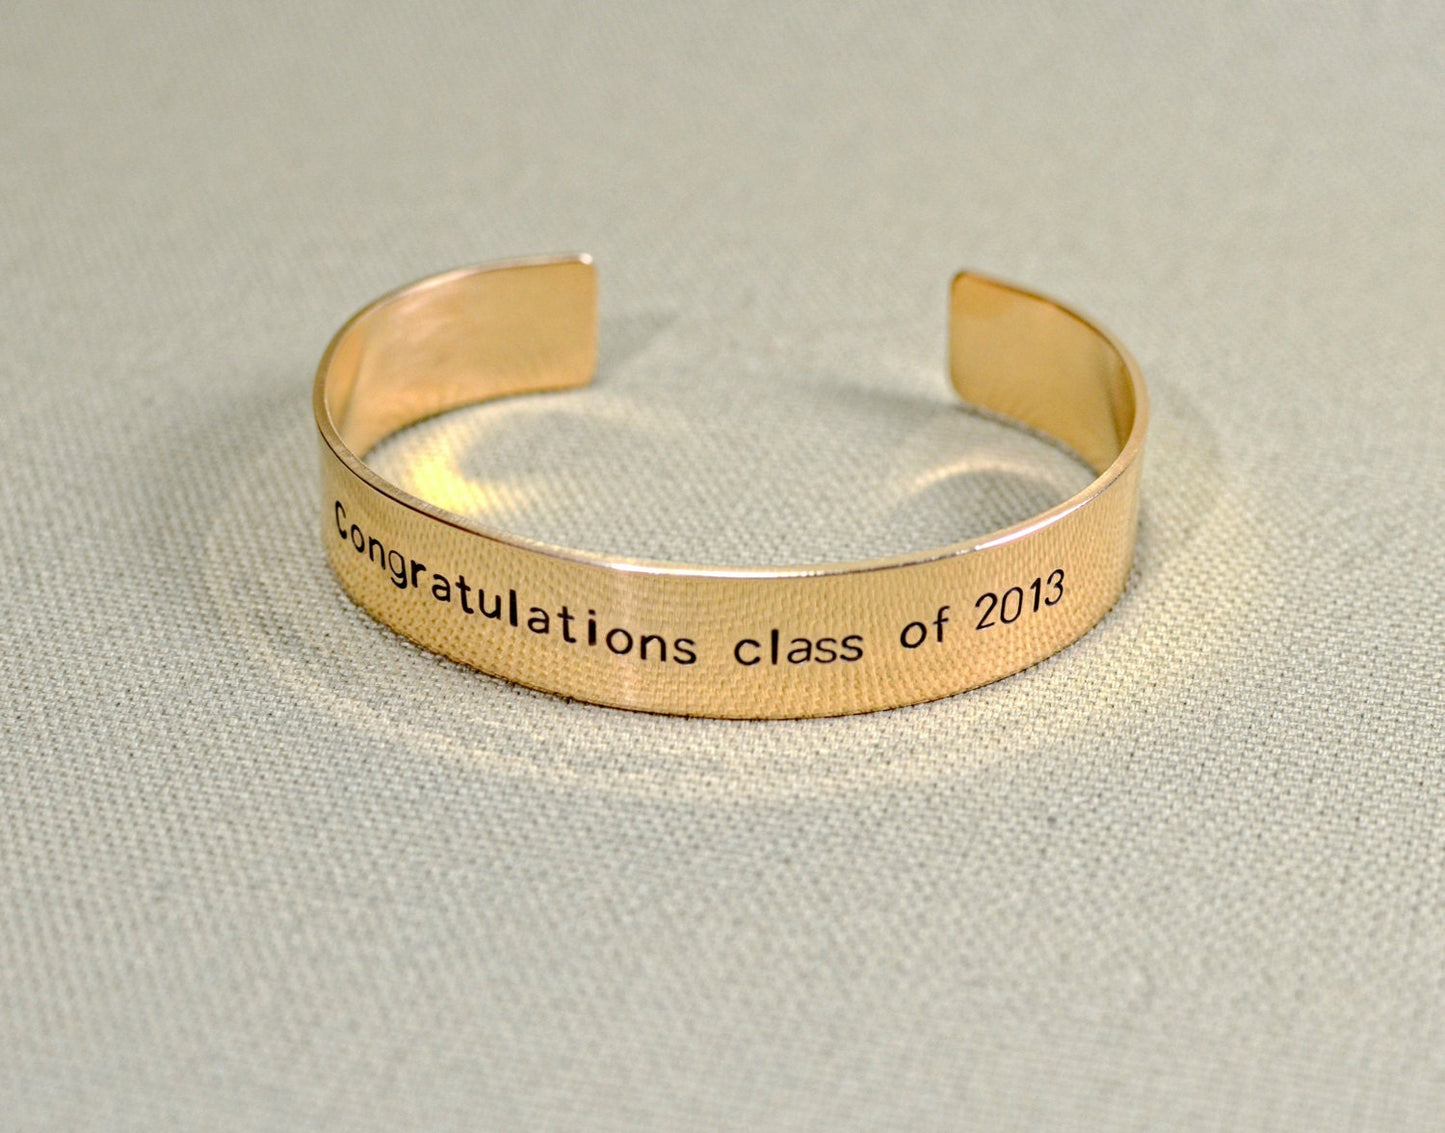 Graduation Bronze Cuff Bracelet with Personalized Messages